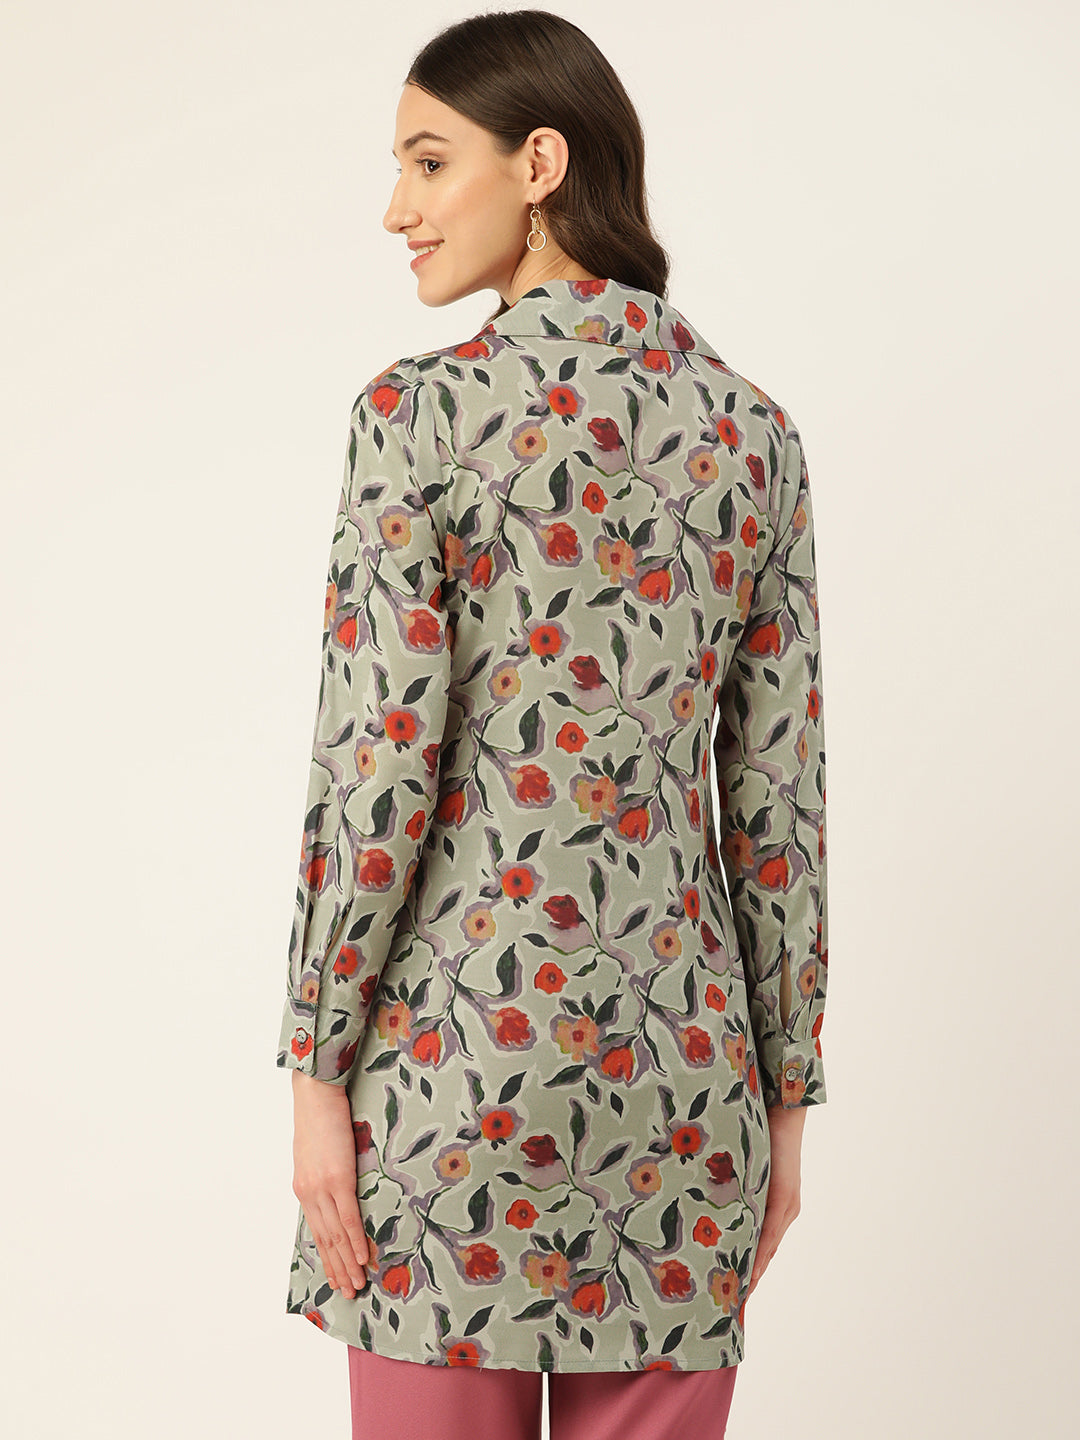 Floral Print Crepe Shirt Style Longline Top